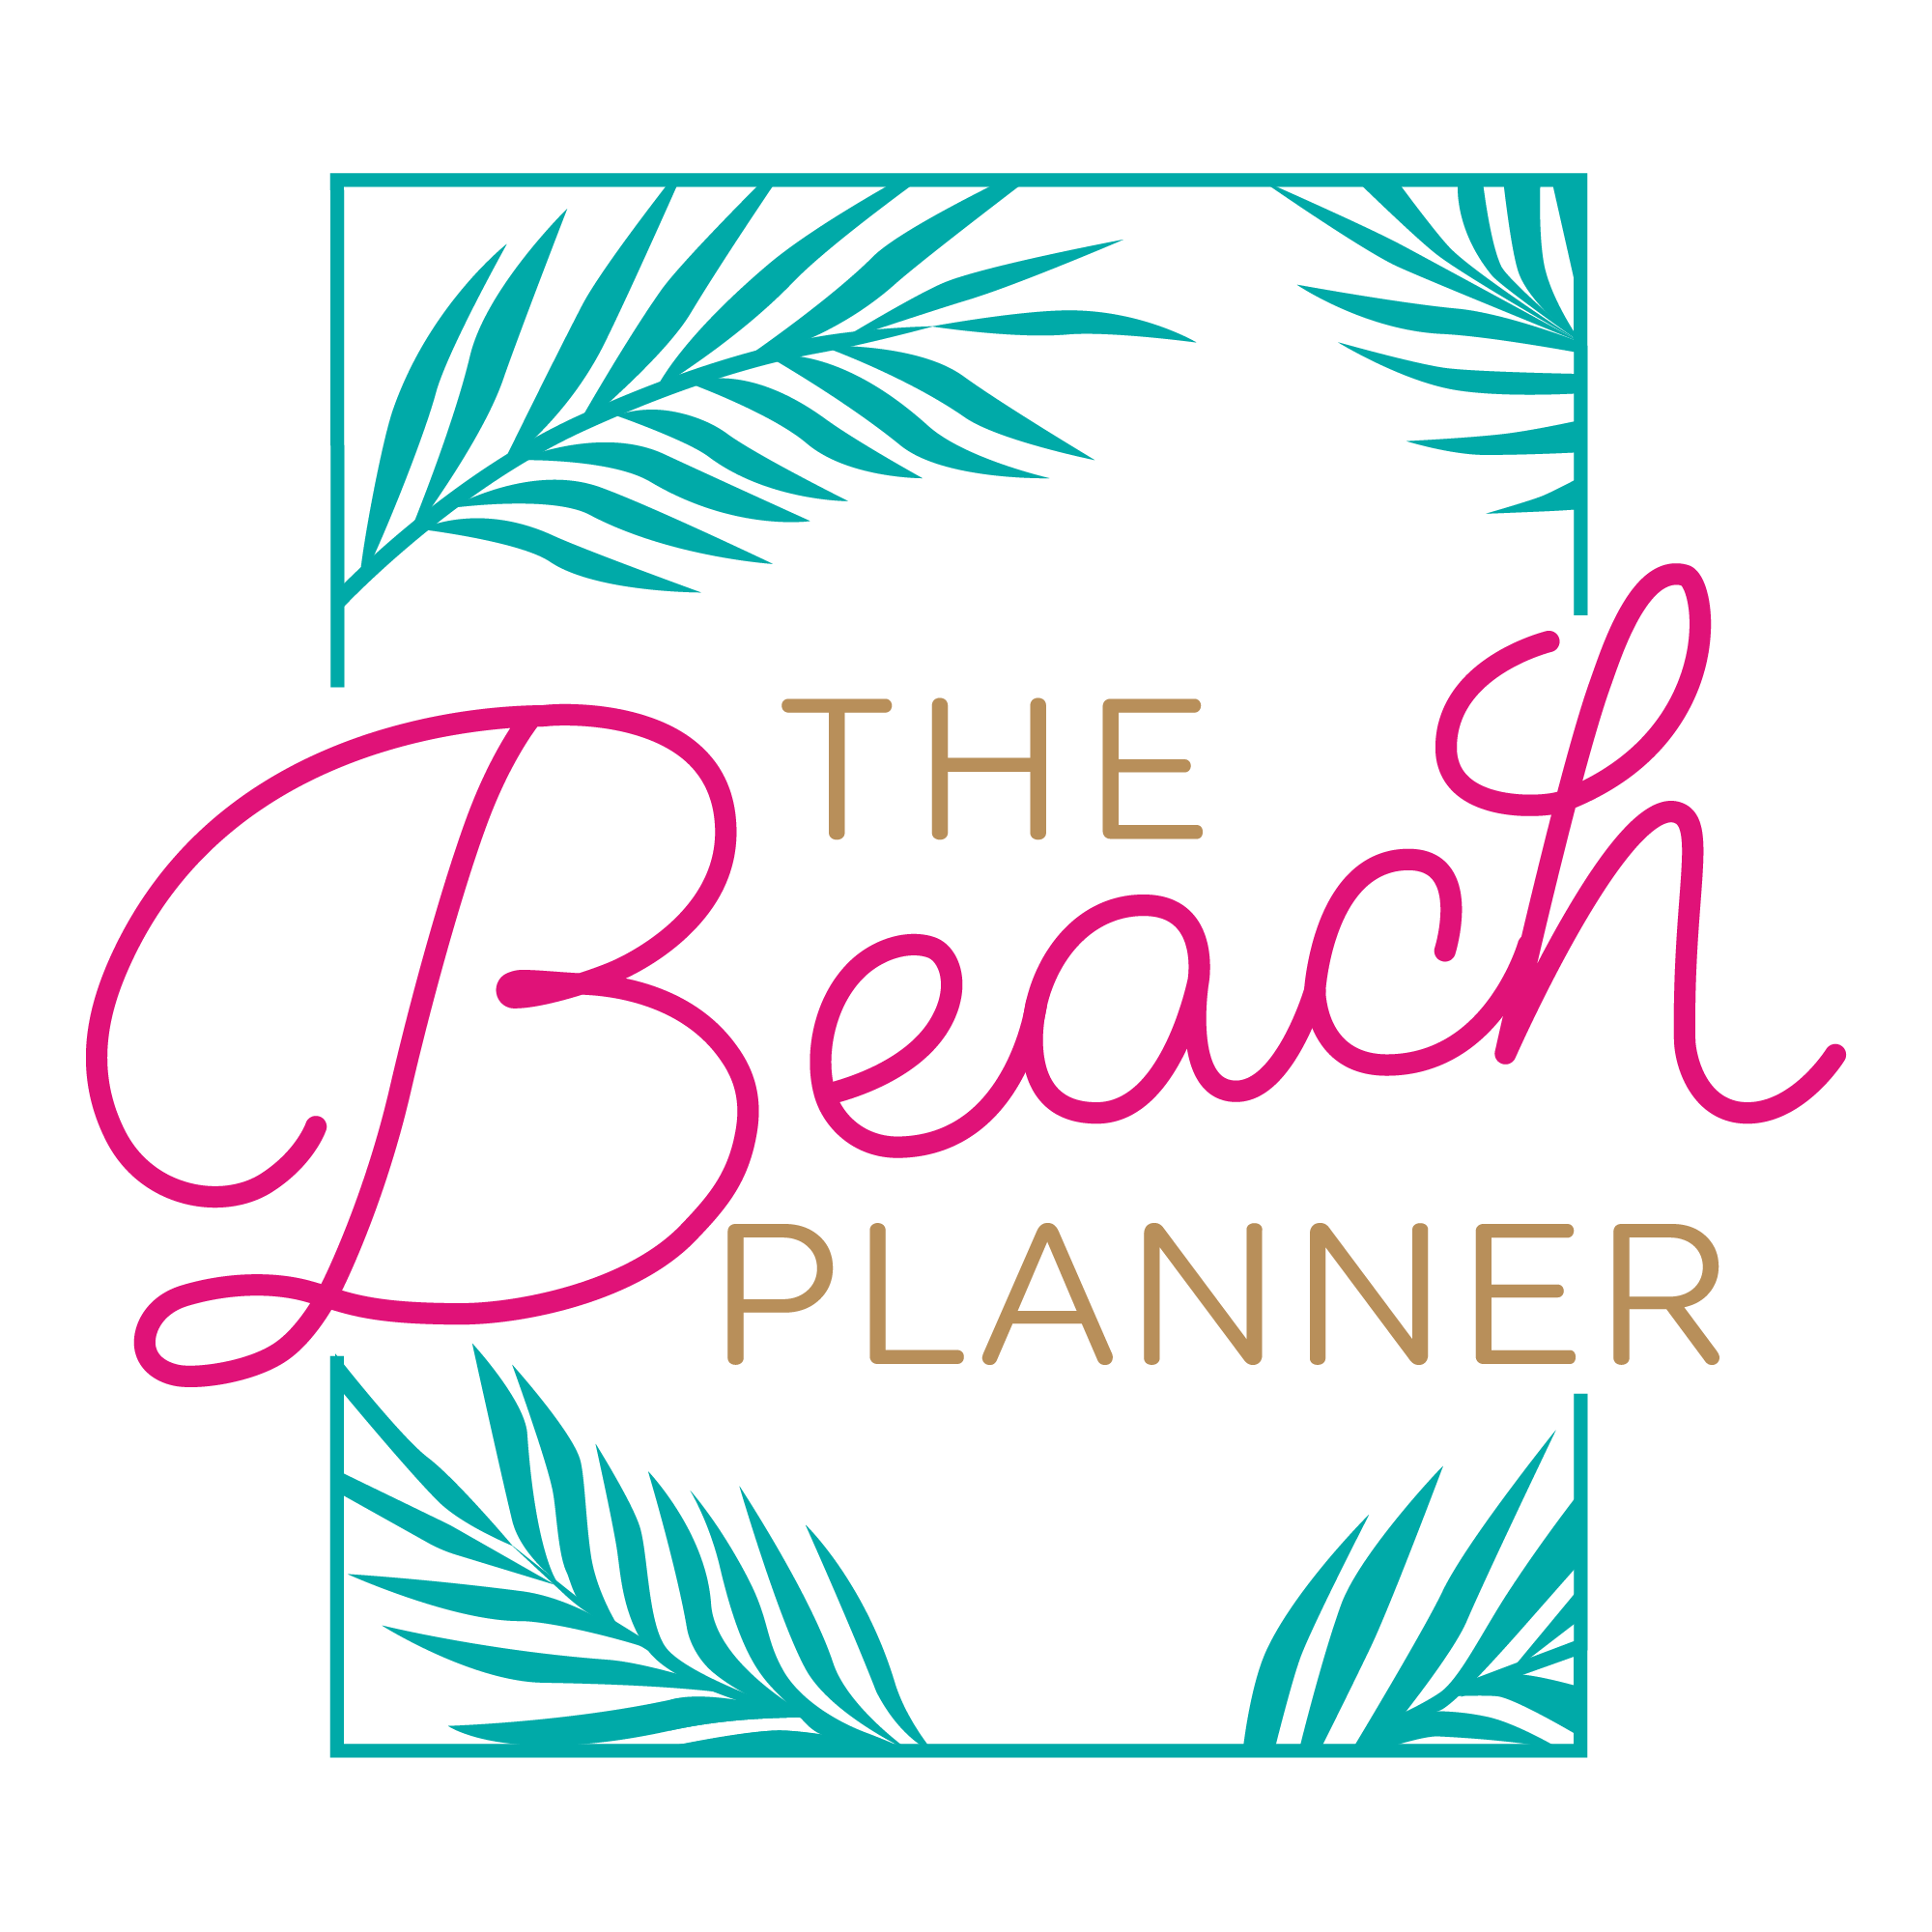 The Beach Planner's logo